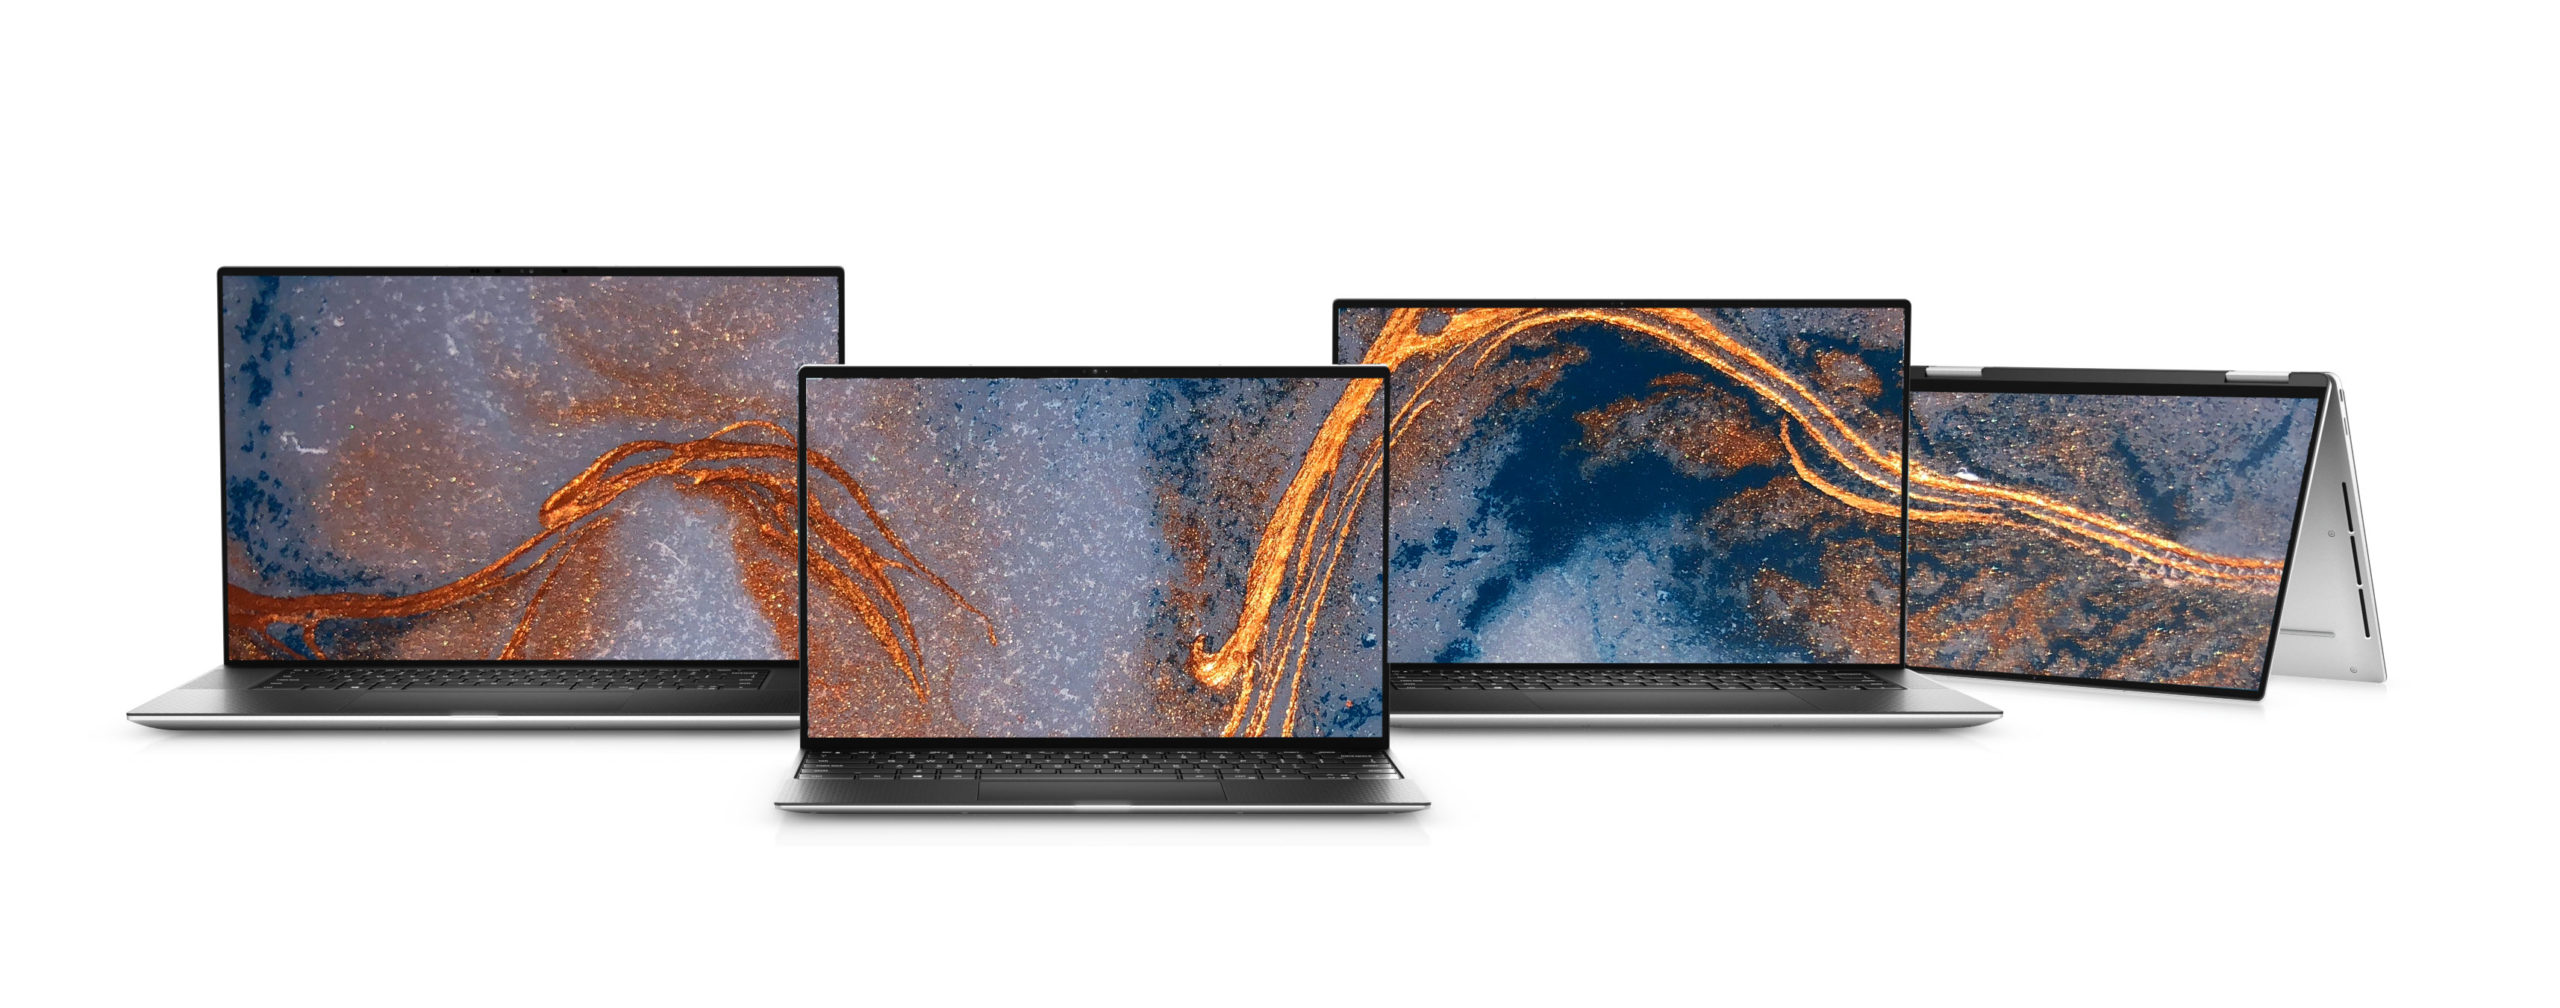 Dell's XPS laptops